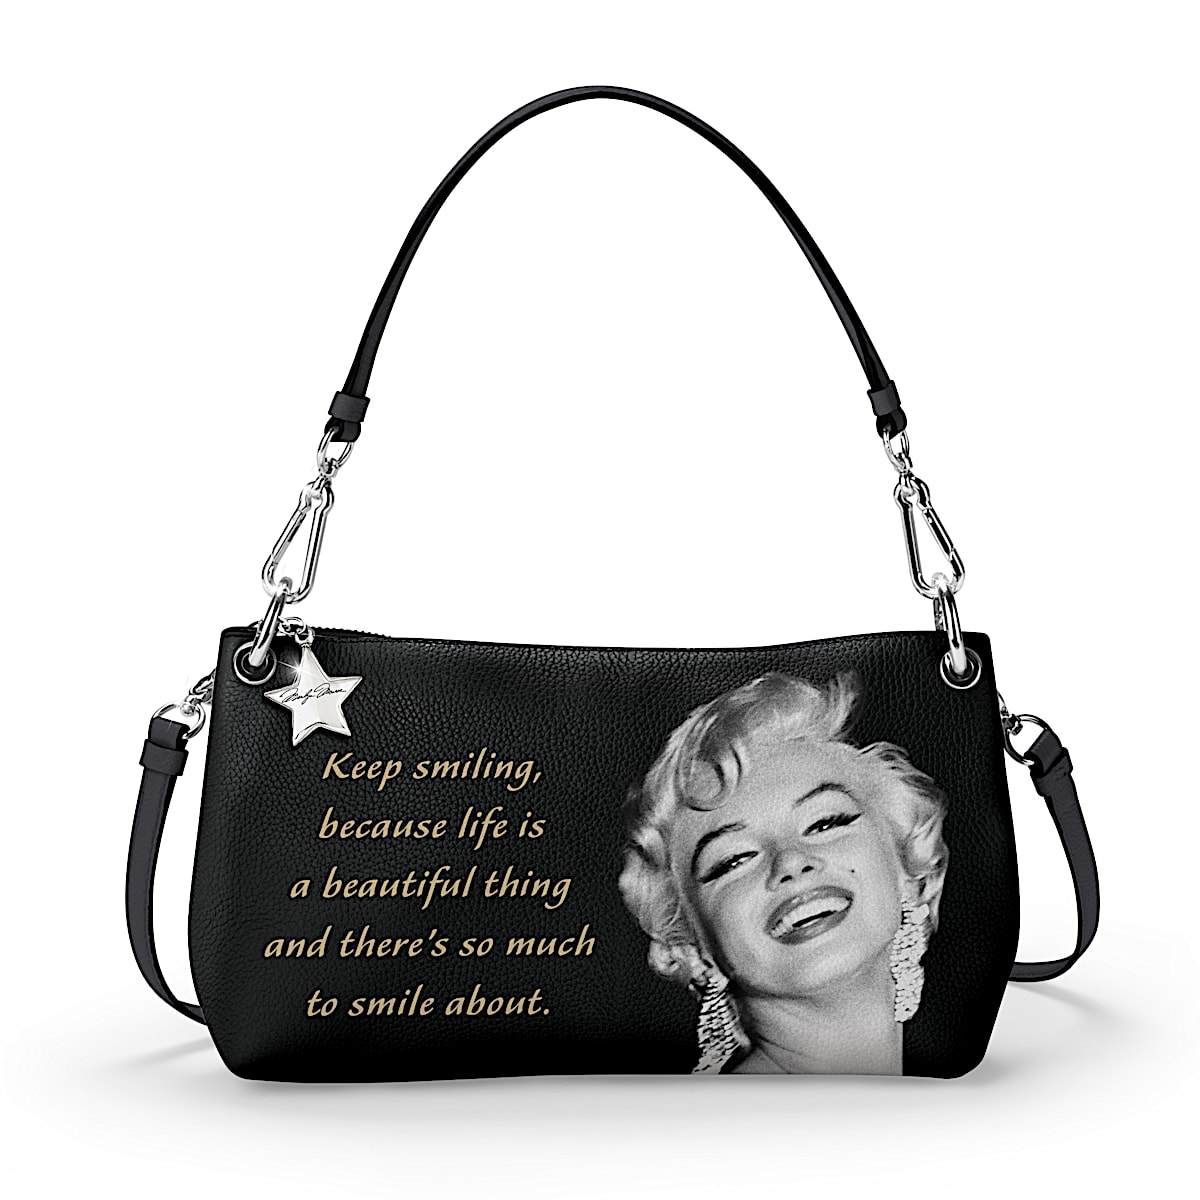 Marilyn Monroe Convertible Handbag%3A Wear It 3 Ways